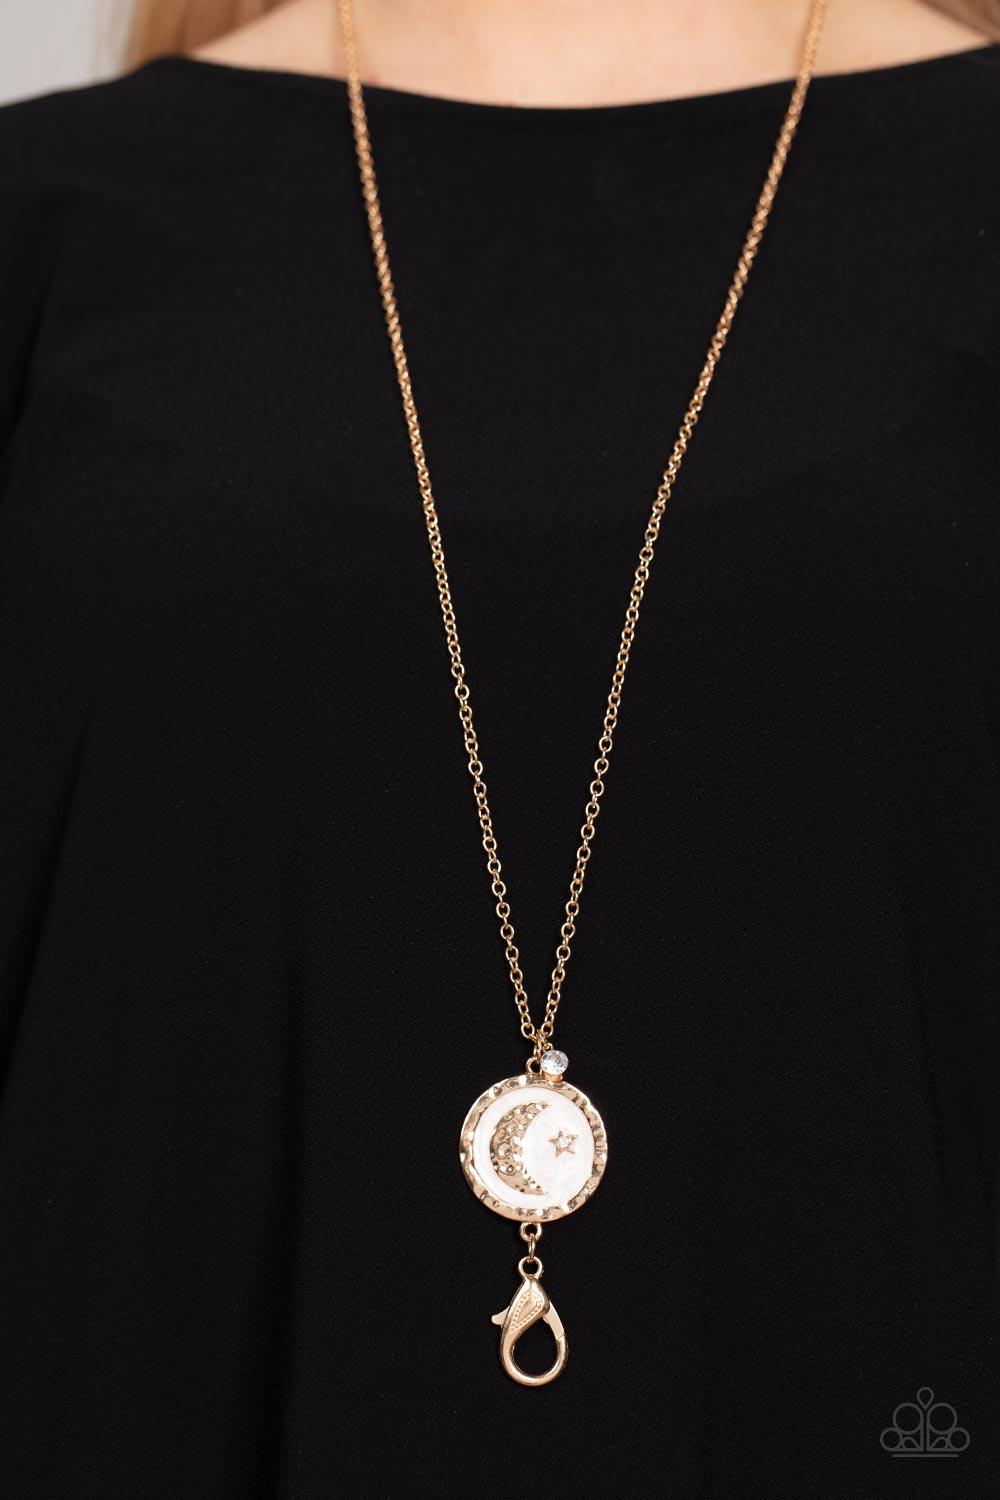 Milky Way Wanderer Gold Necklace - Jewelry by Bretta